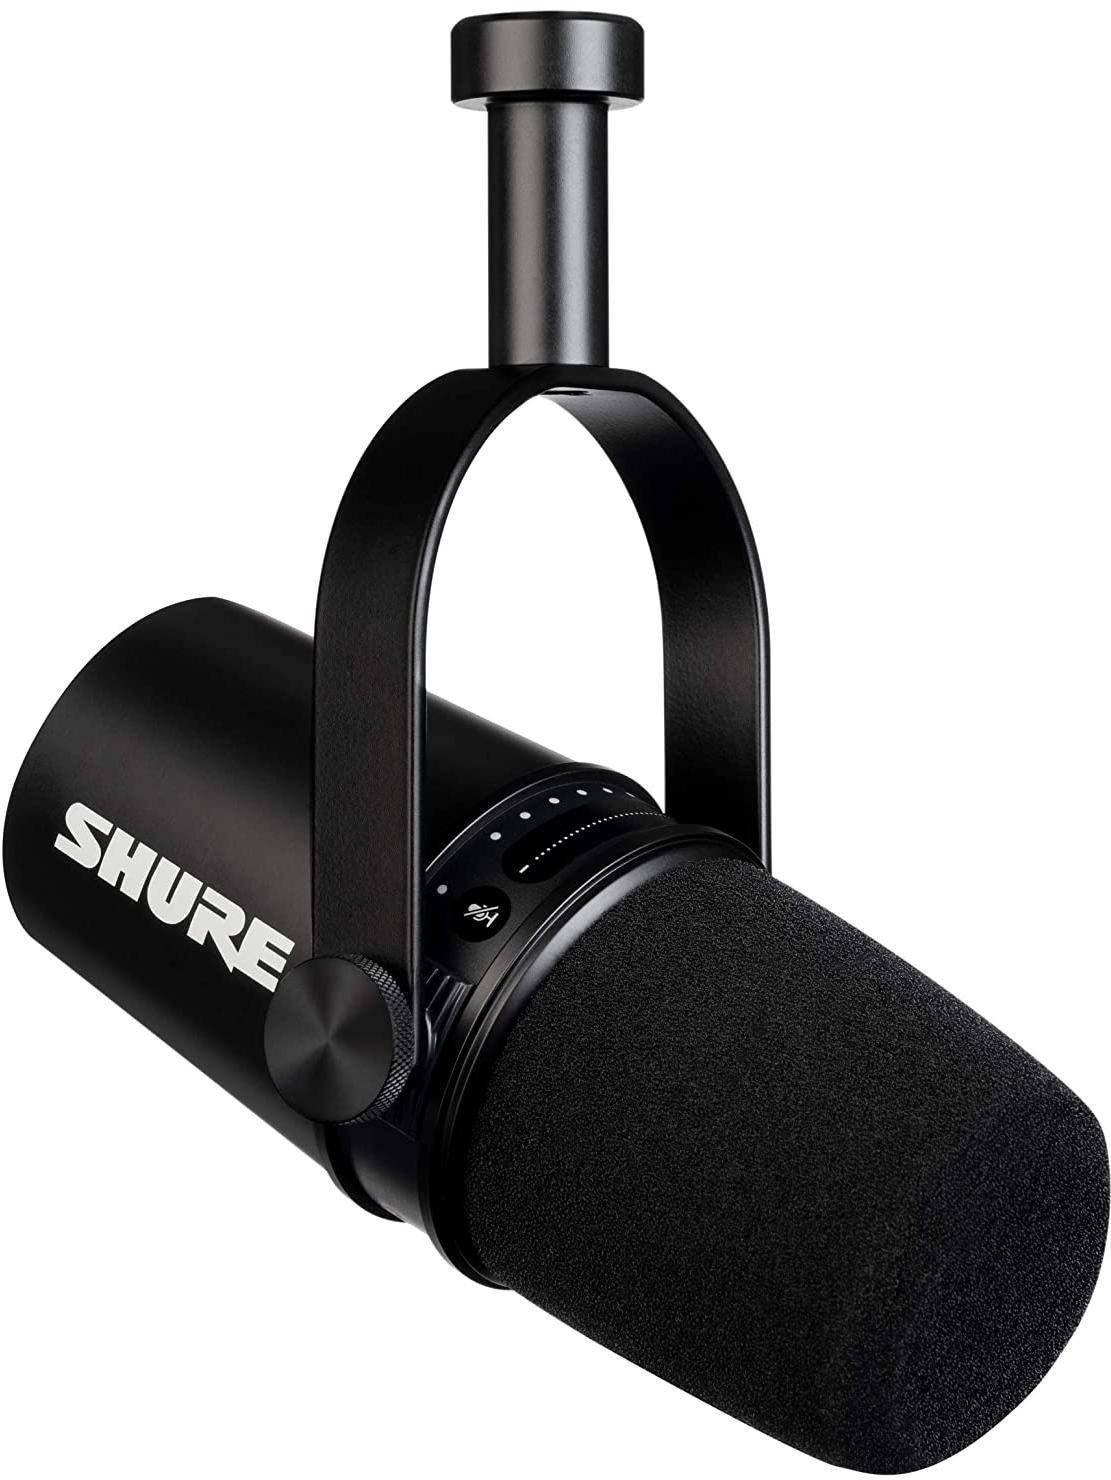 Shure MV7 USB Dynamic Podcasting Microphone zoom image